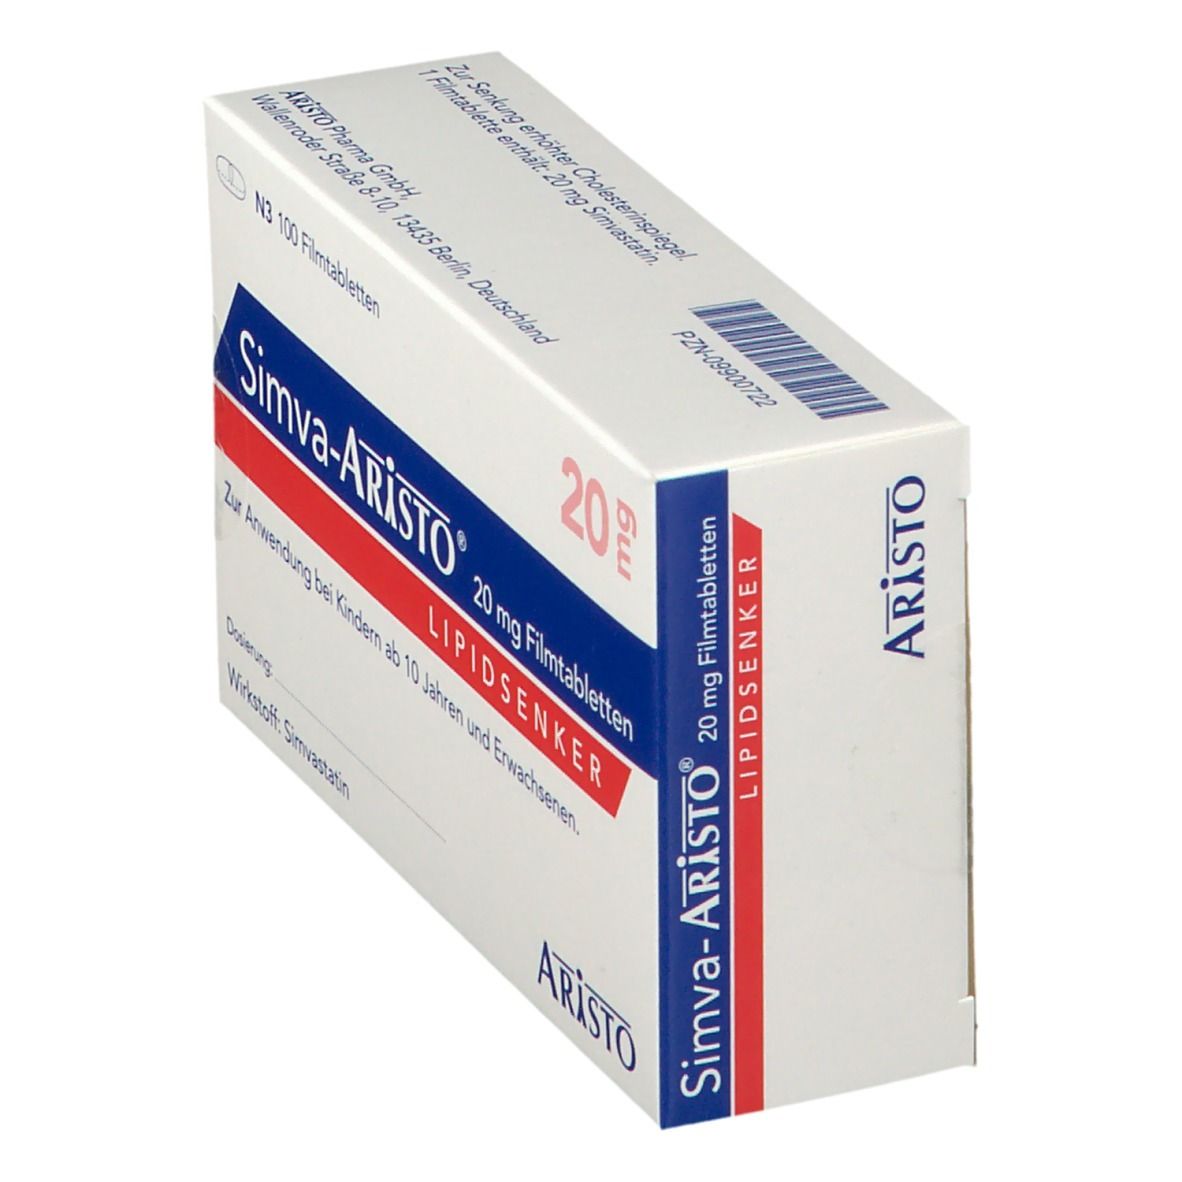 Simva-Aristo® 20 mg